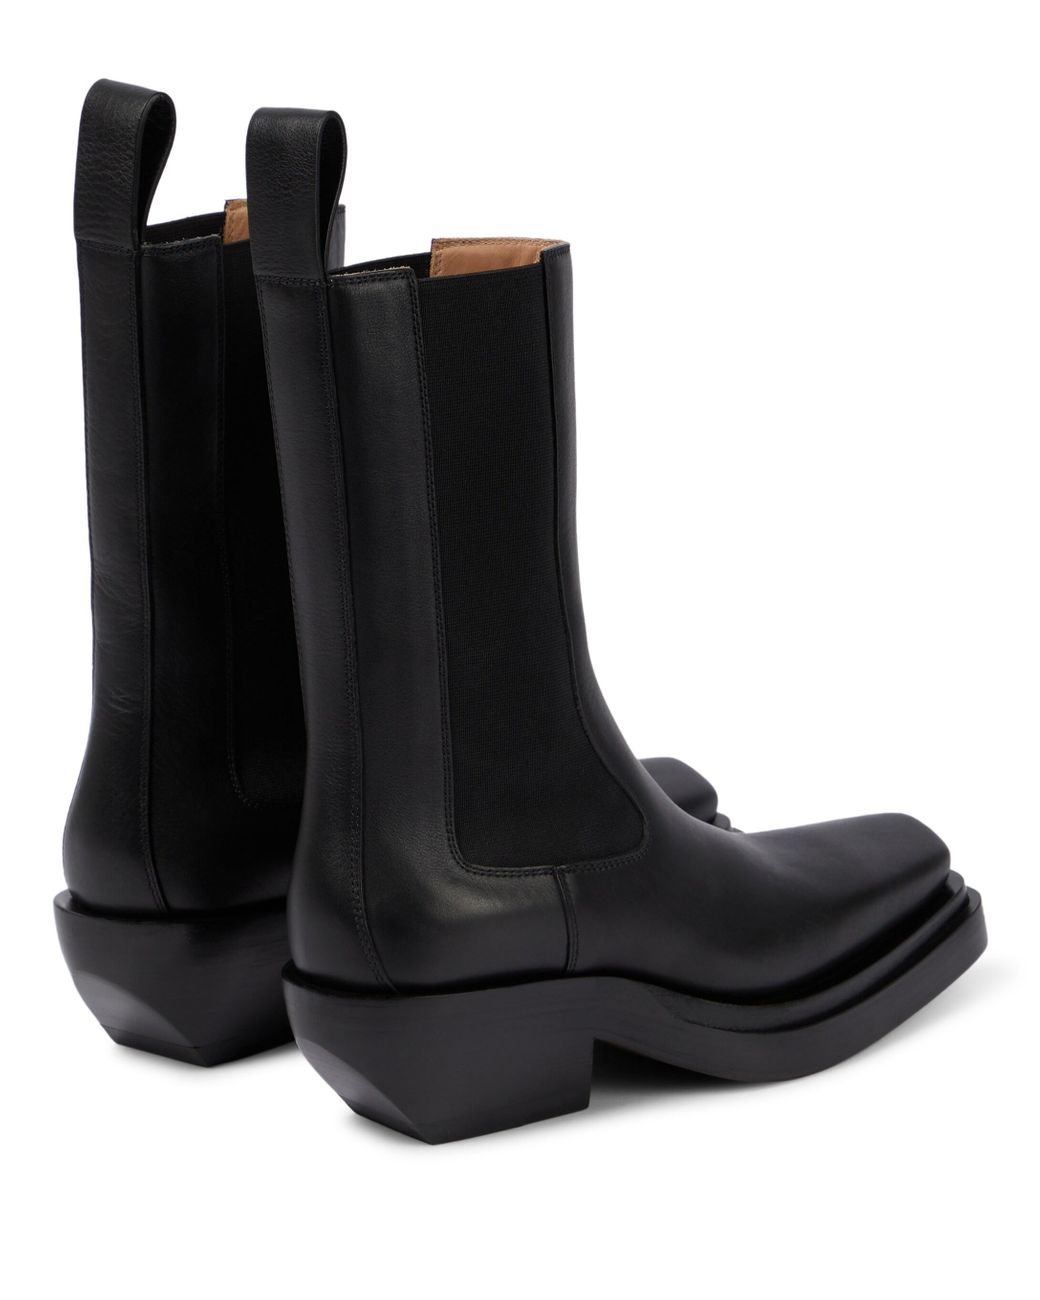 Bottega Veneta Lean Leather Ankle Boots in Black | Lyst